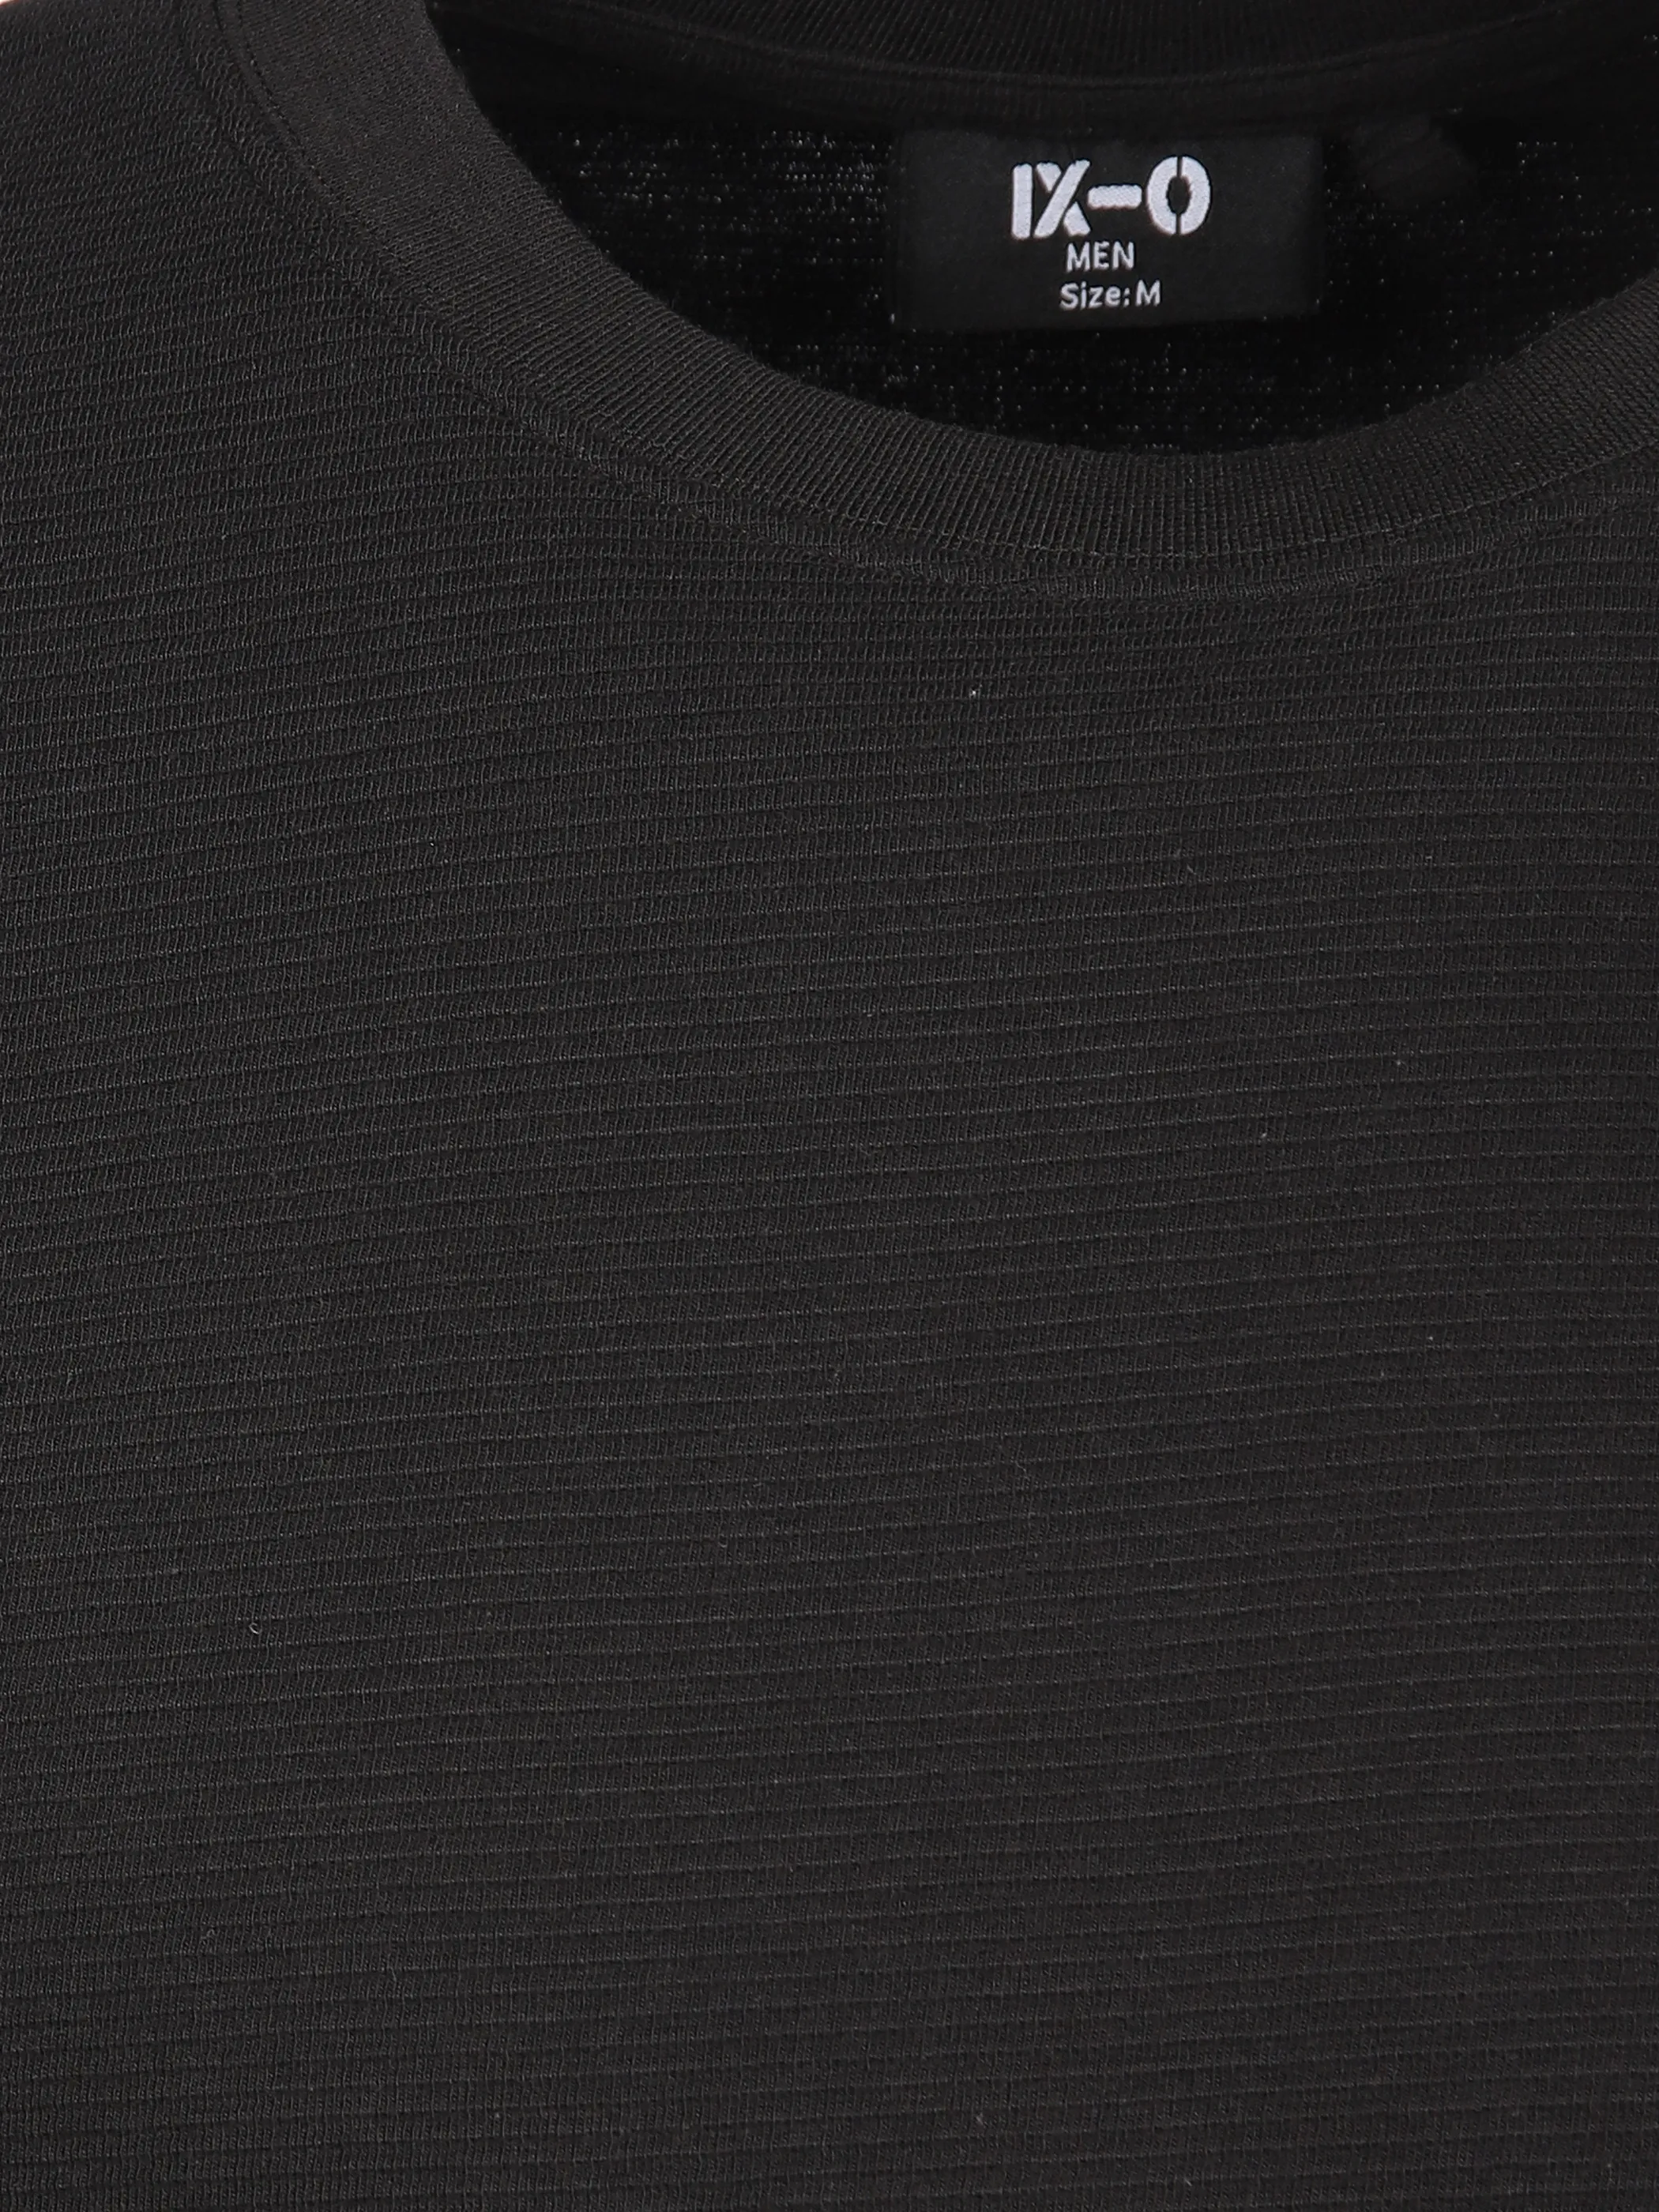 IX-O YF-He- T-Shirt Relaxed Fit Schwarz 891819 BLACK 3